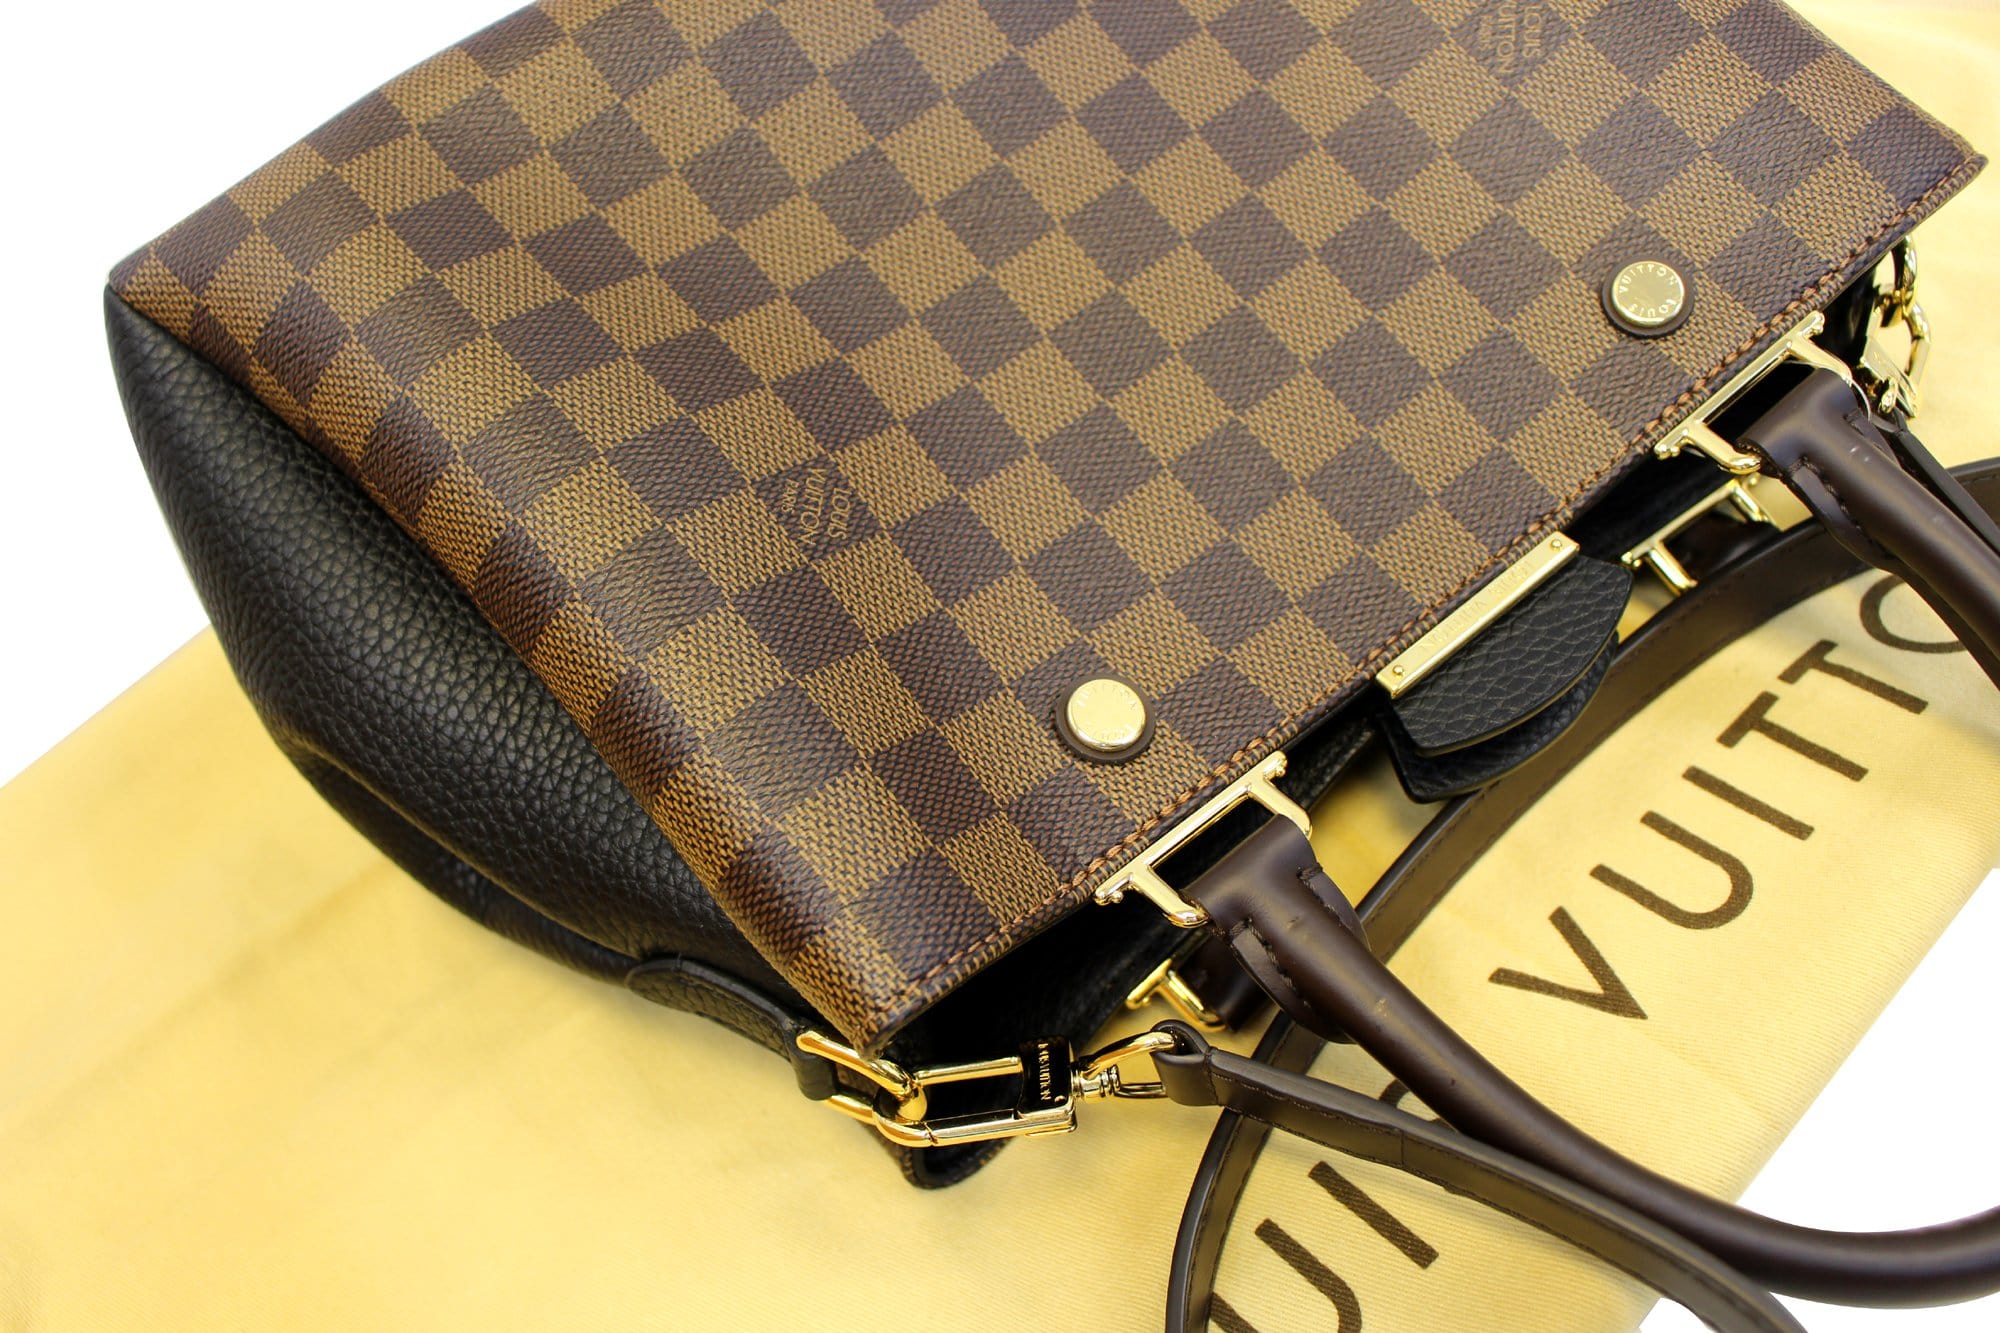 Louis Vuitton Damier Ebene & Black Taurillon Leather Brittany Bag